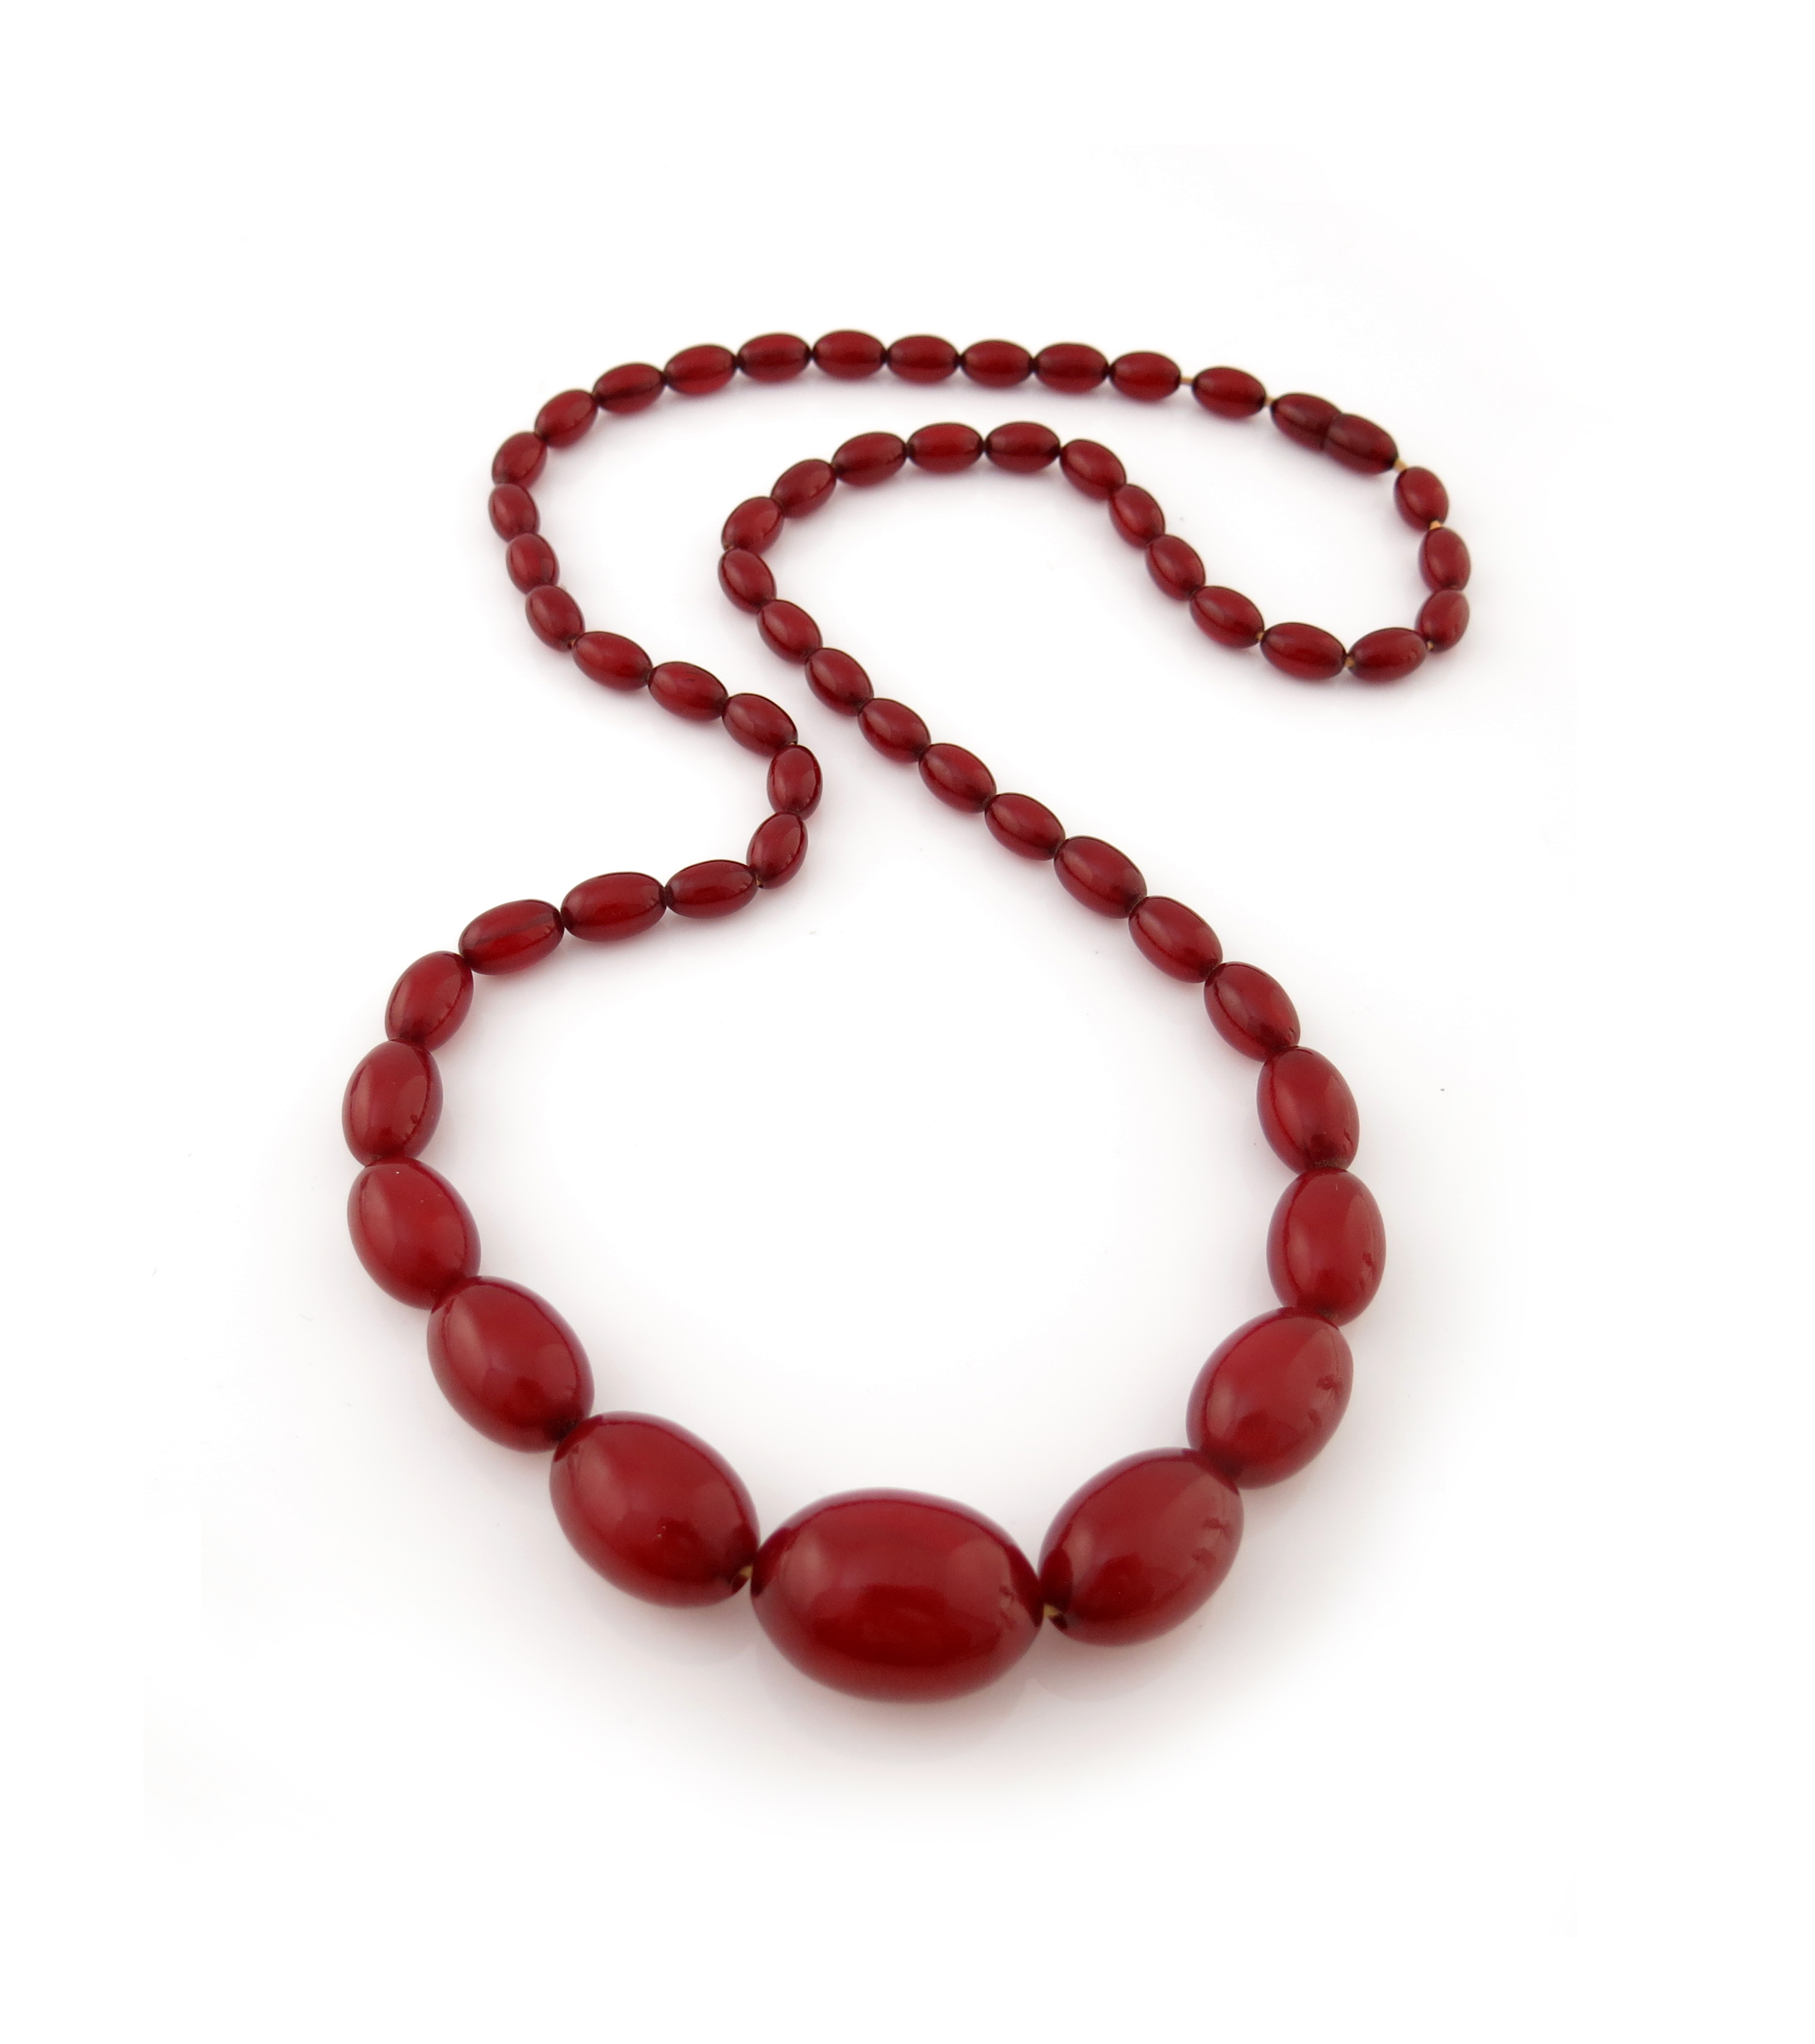 A bakelite bead necklace